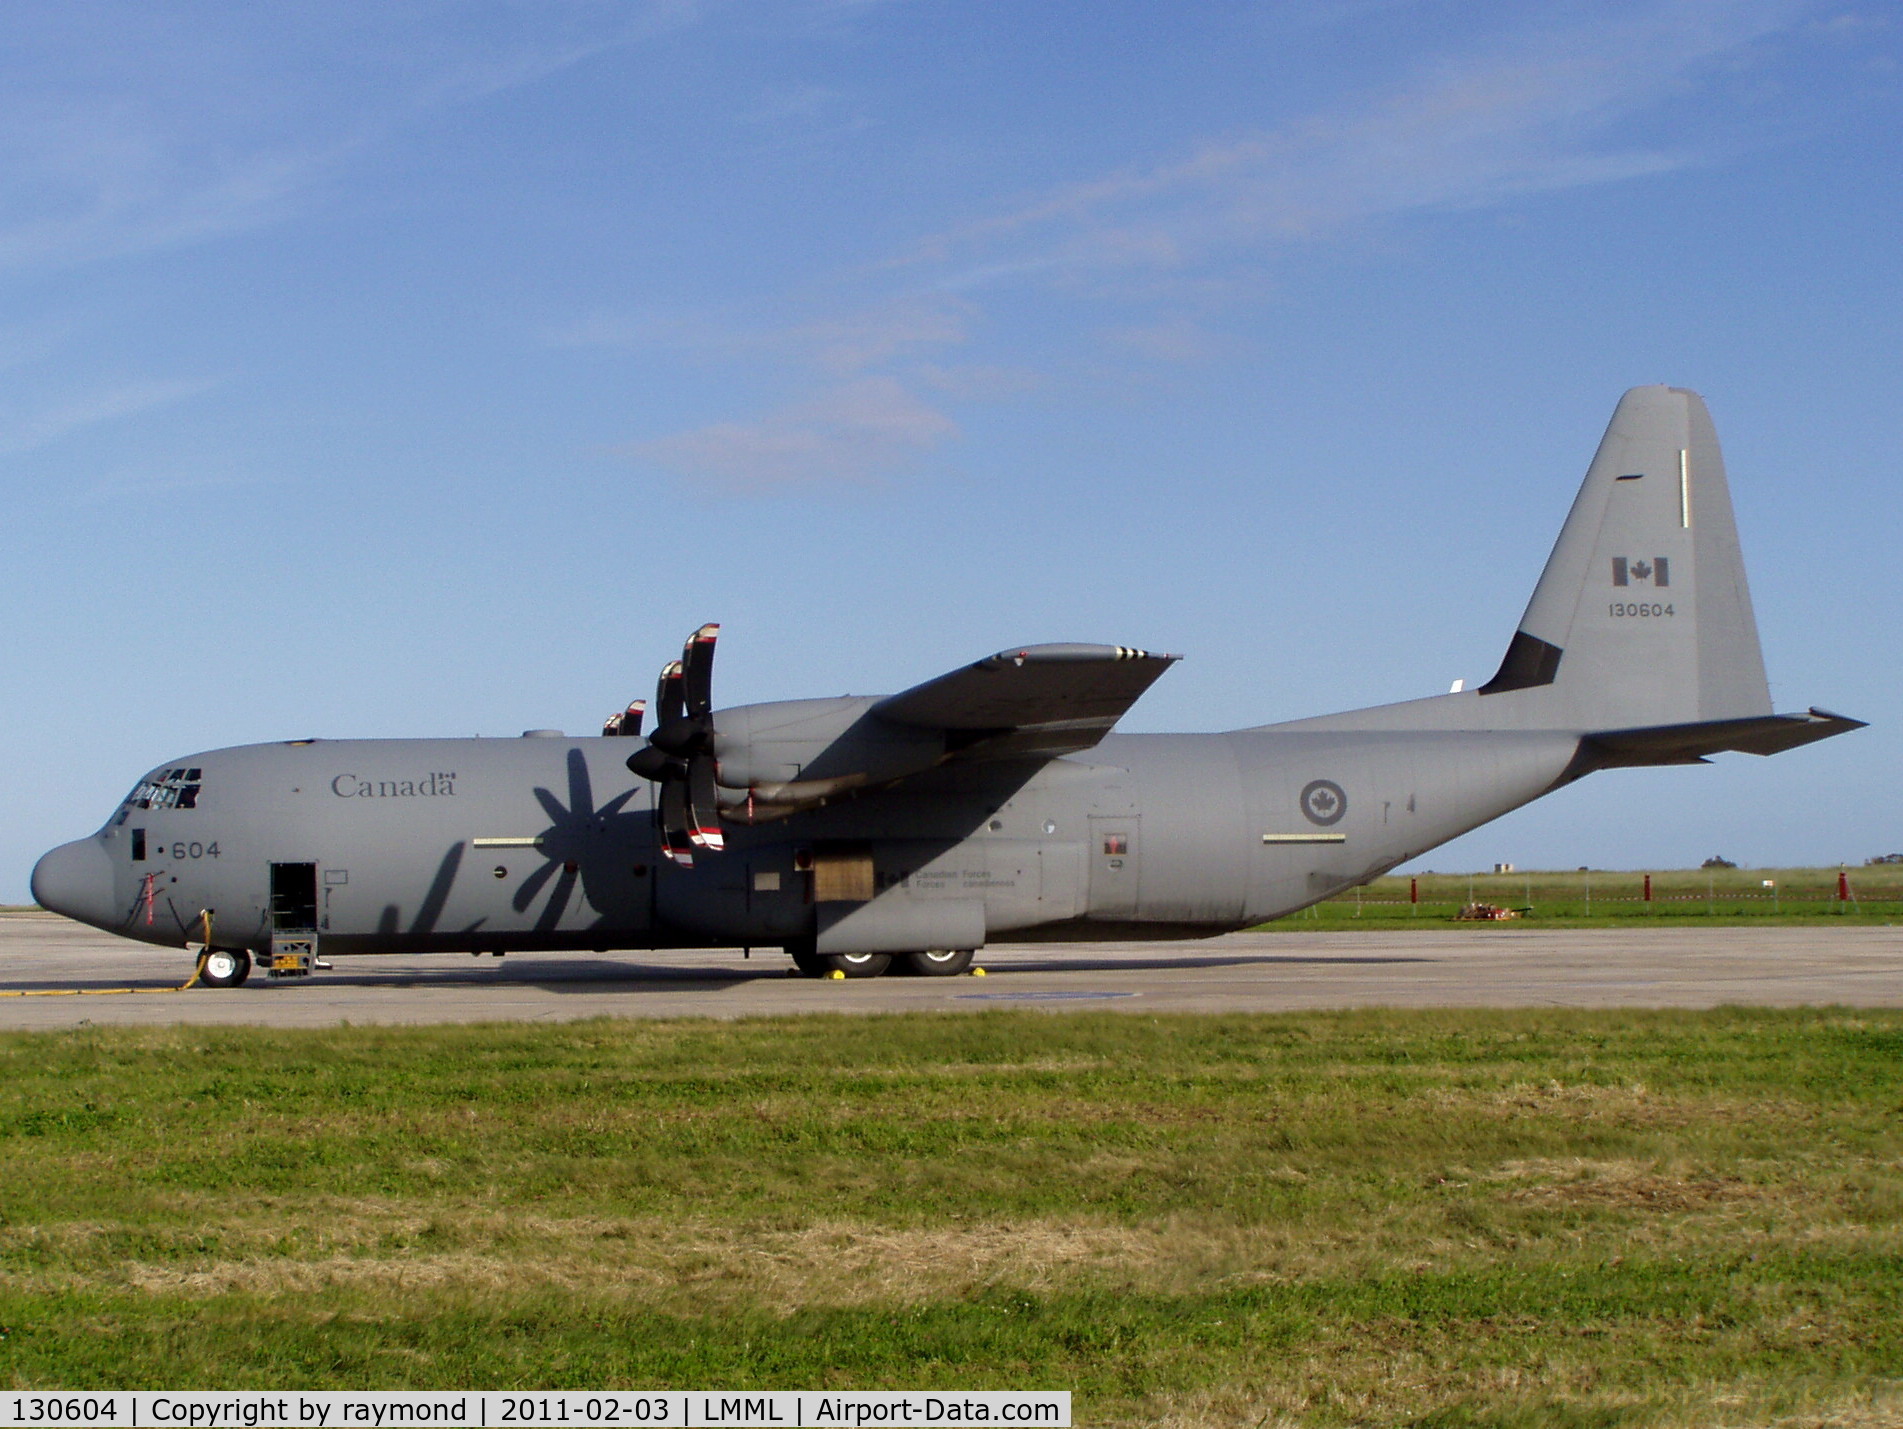 130604, 2010 Lockheed Martin CC-130J-30 Hercules C/N 382-5636, CC130 130604 Canadian Armed Forces